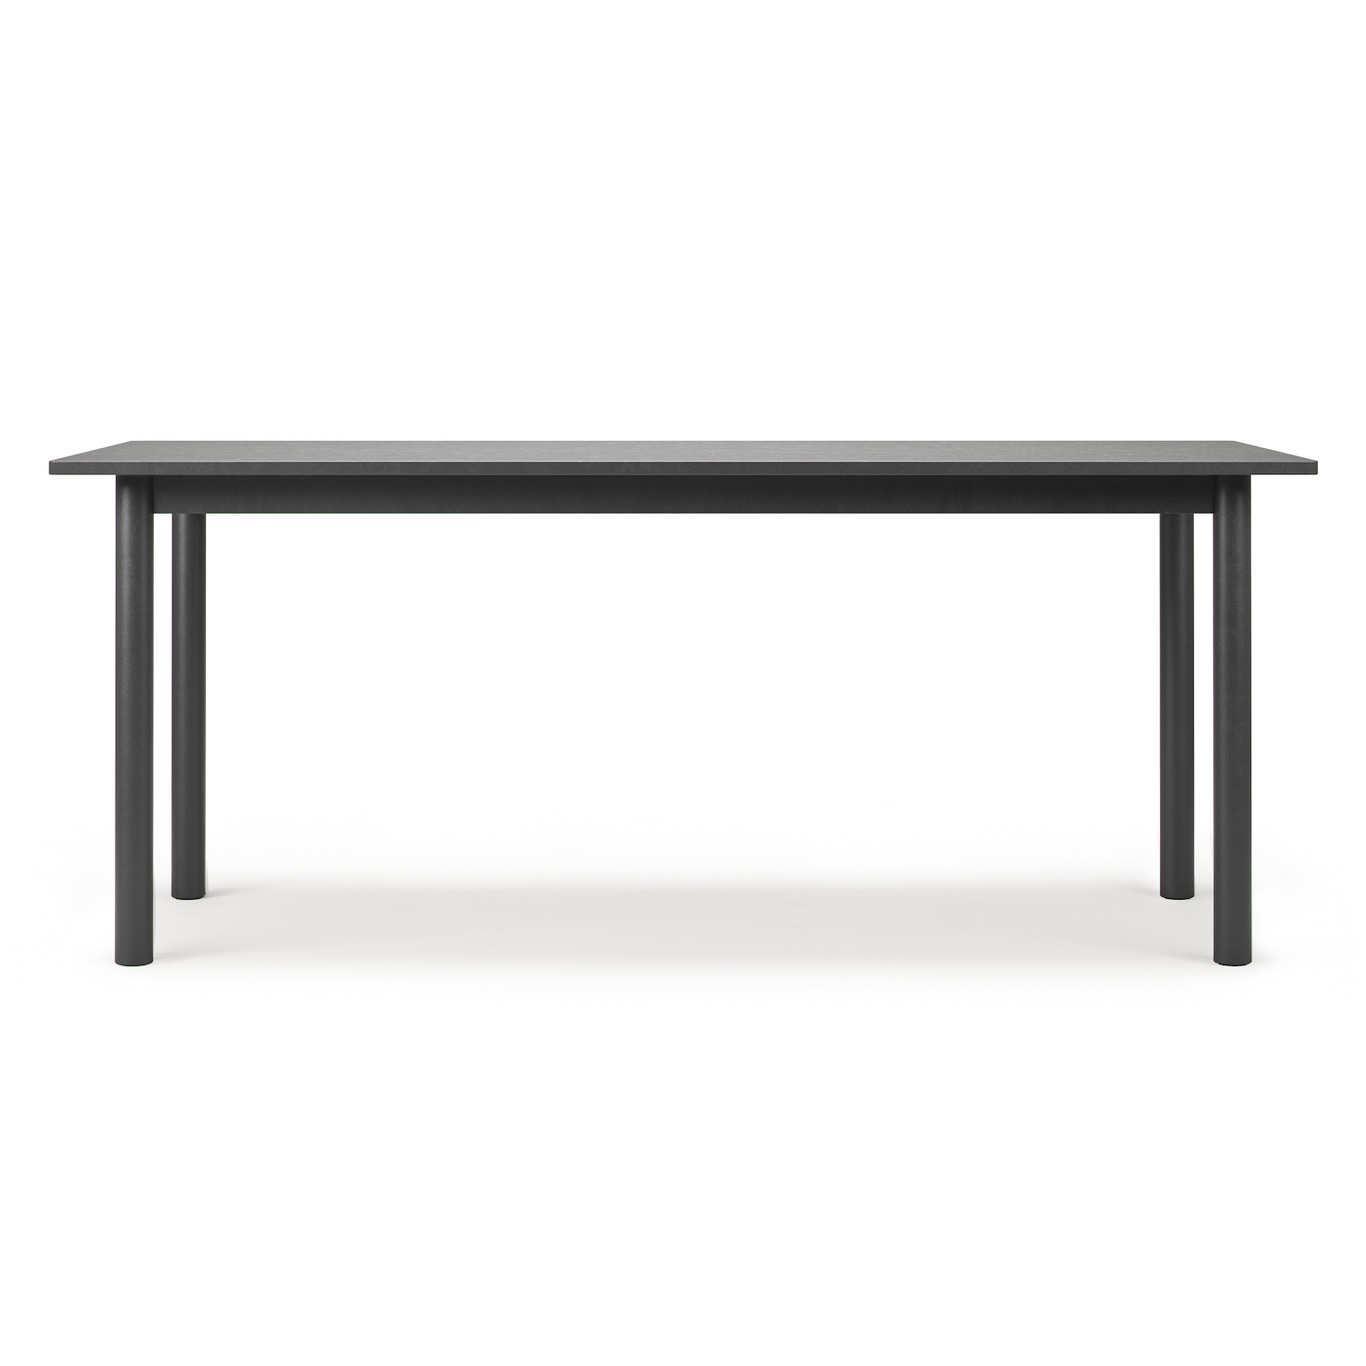 Milo C12 Dining Table 84x180 cm, Black